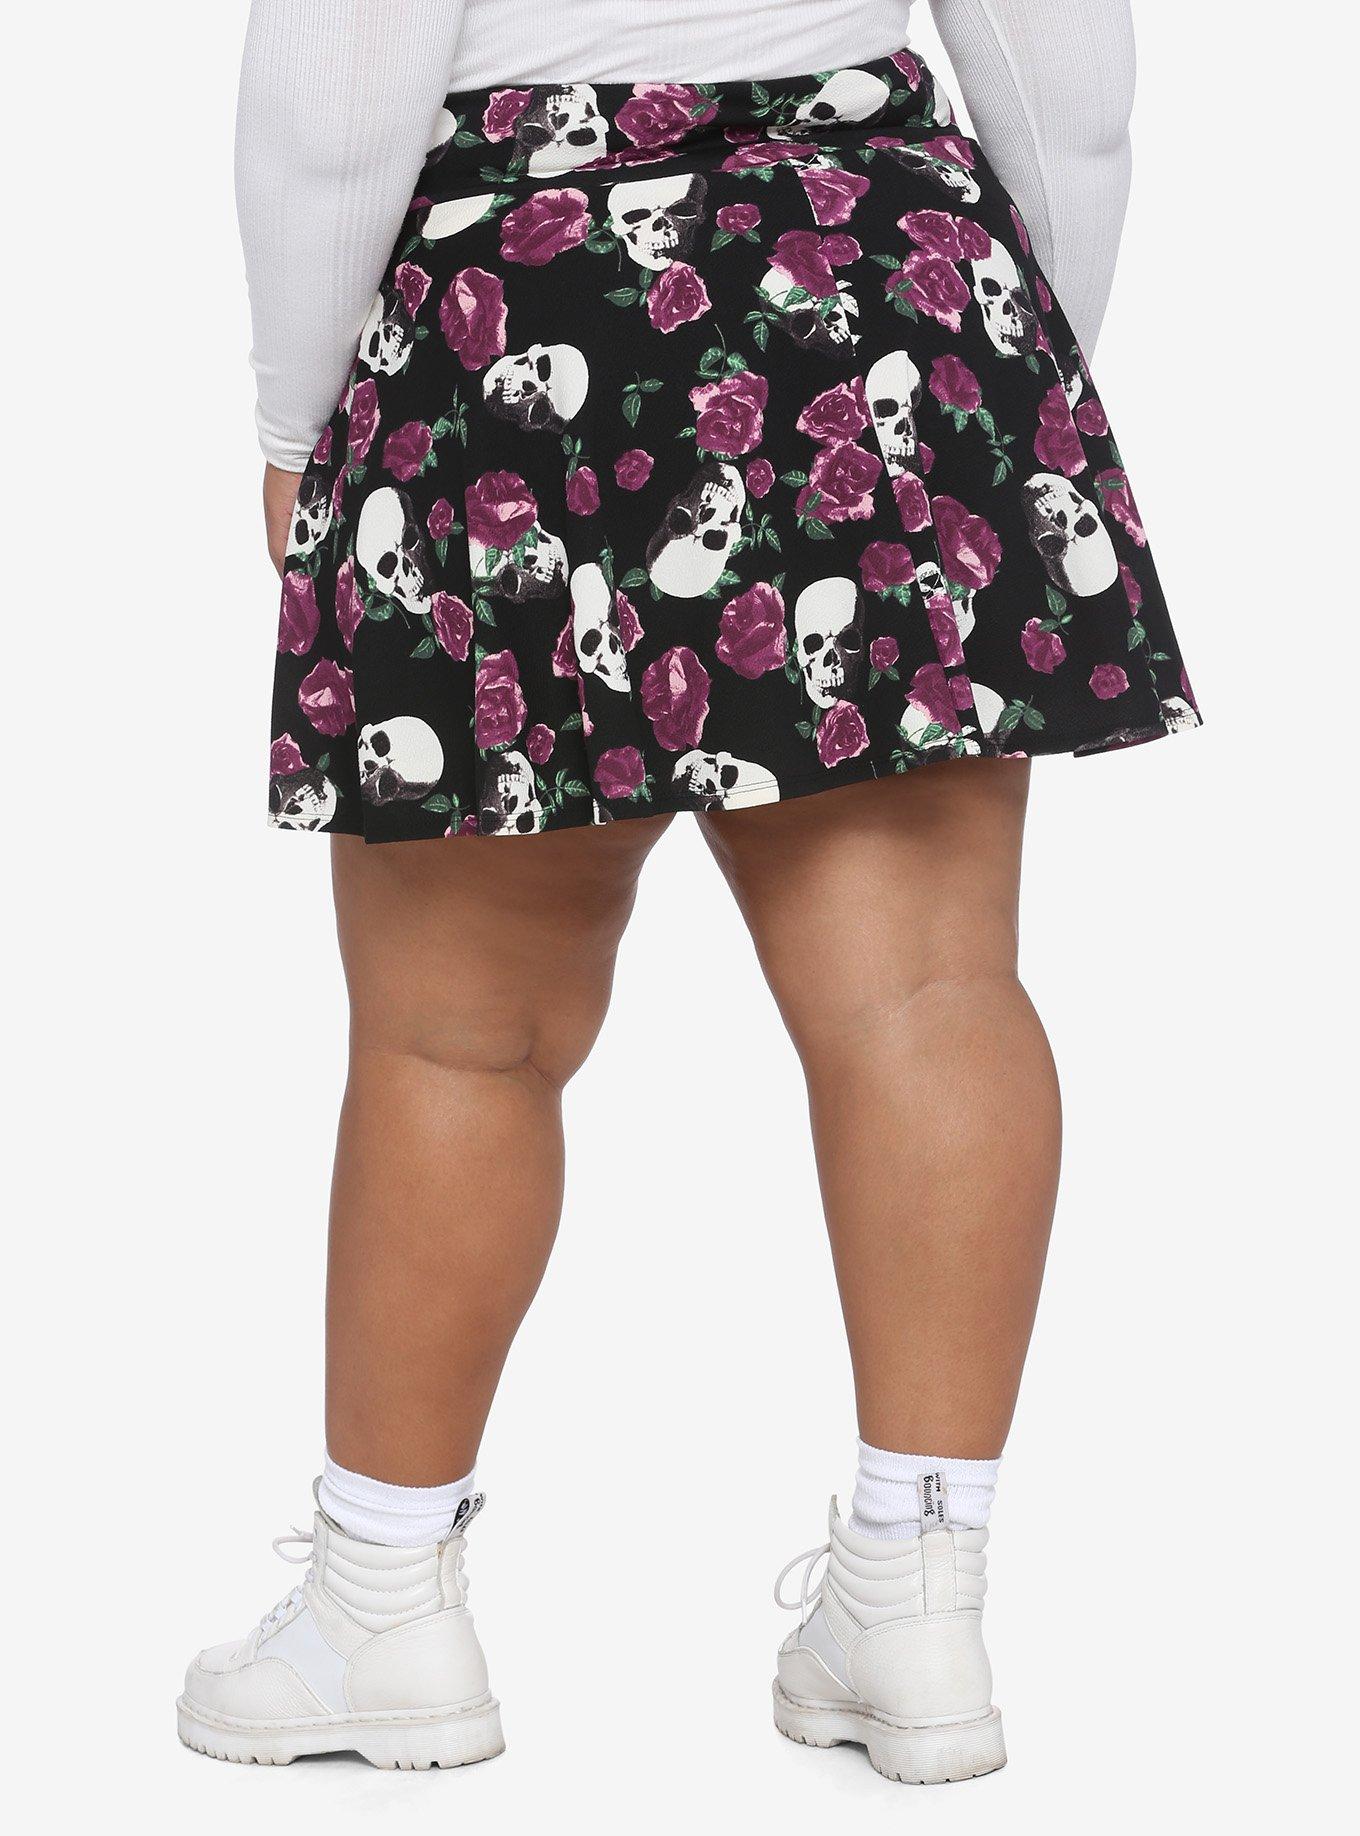 Purple Roses & Skulls Lace-Up Skater Skirt Plus Size, MULTI, alternate